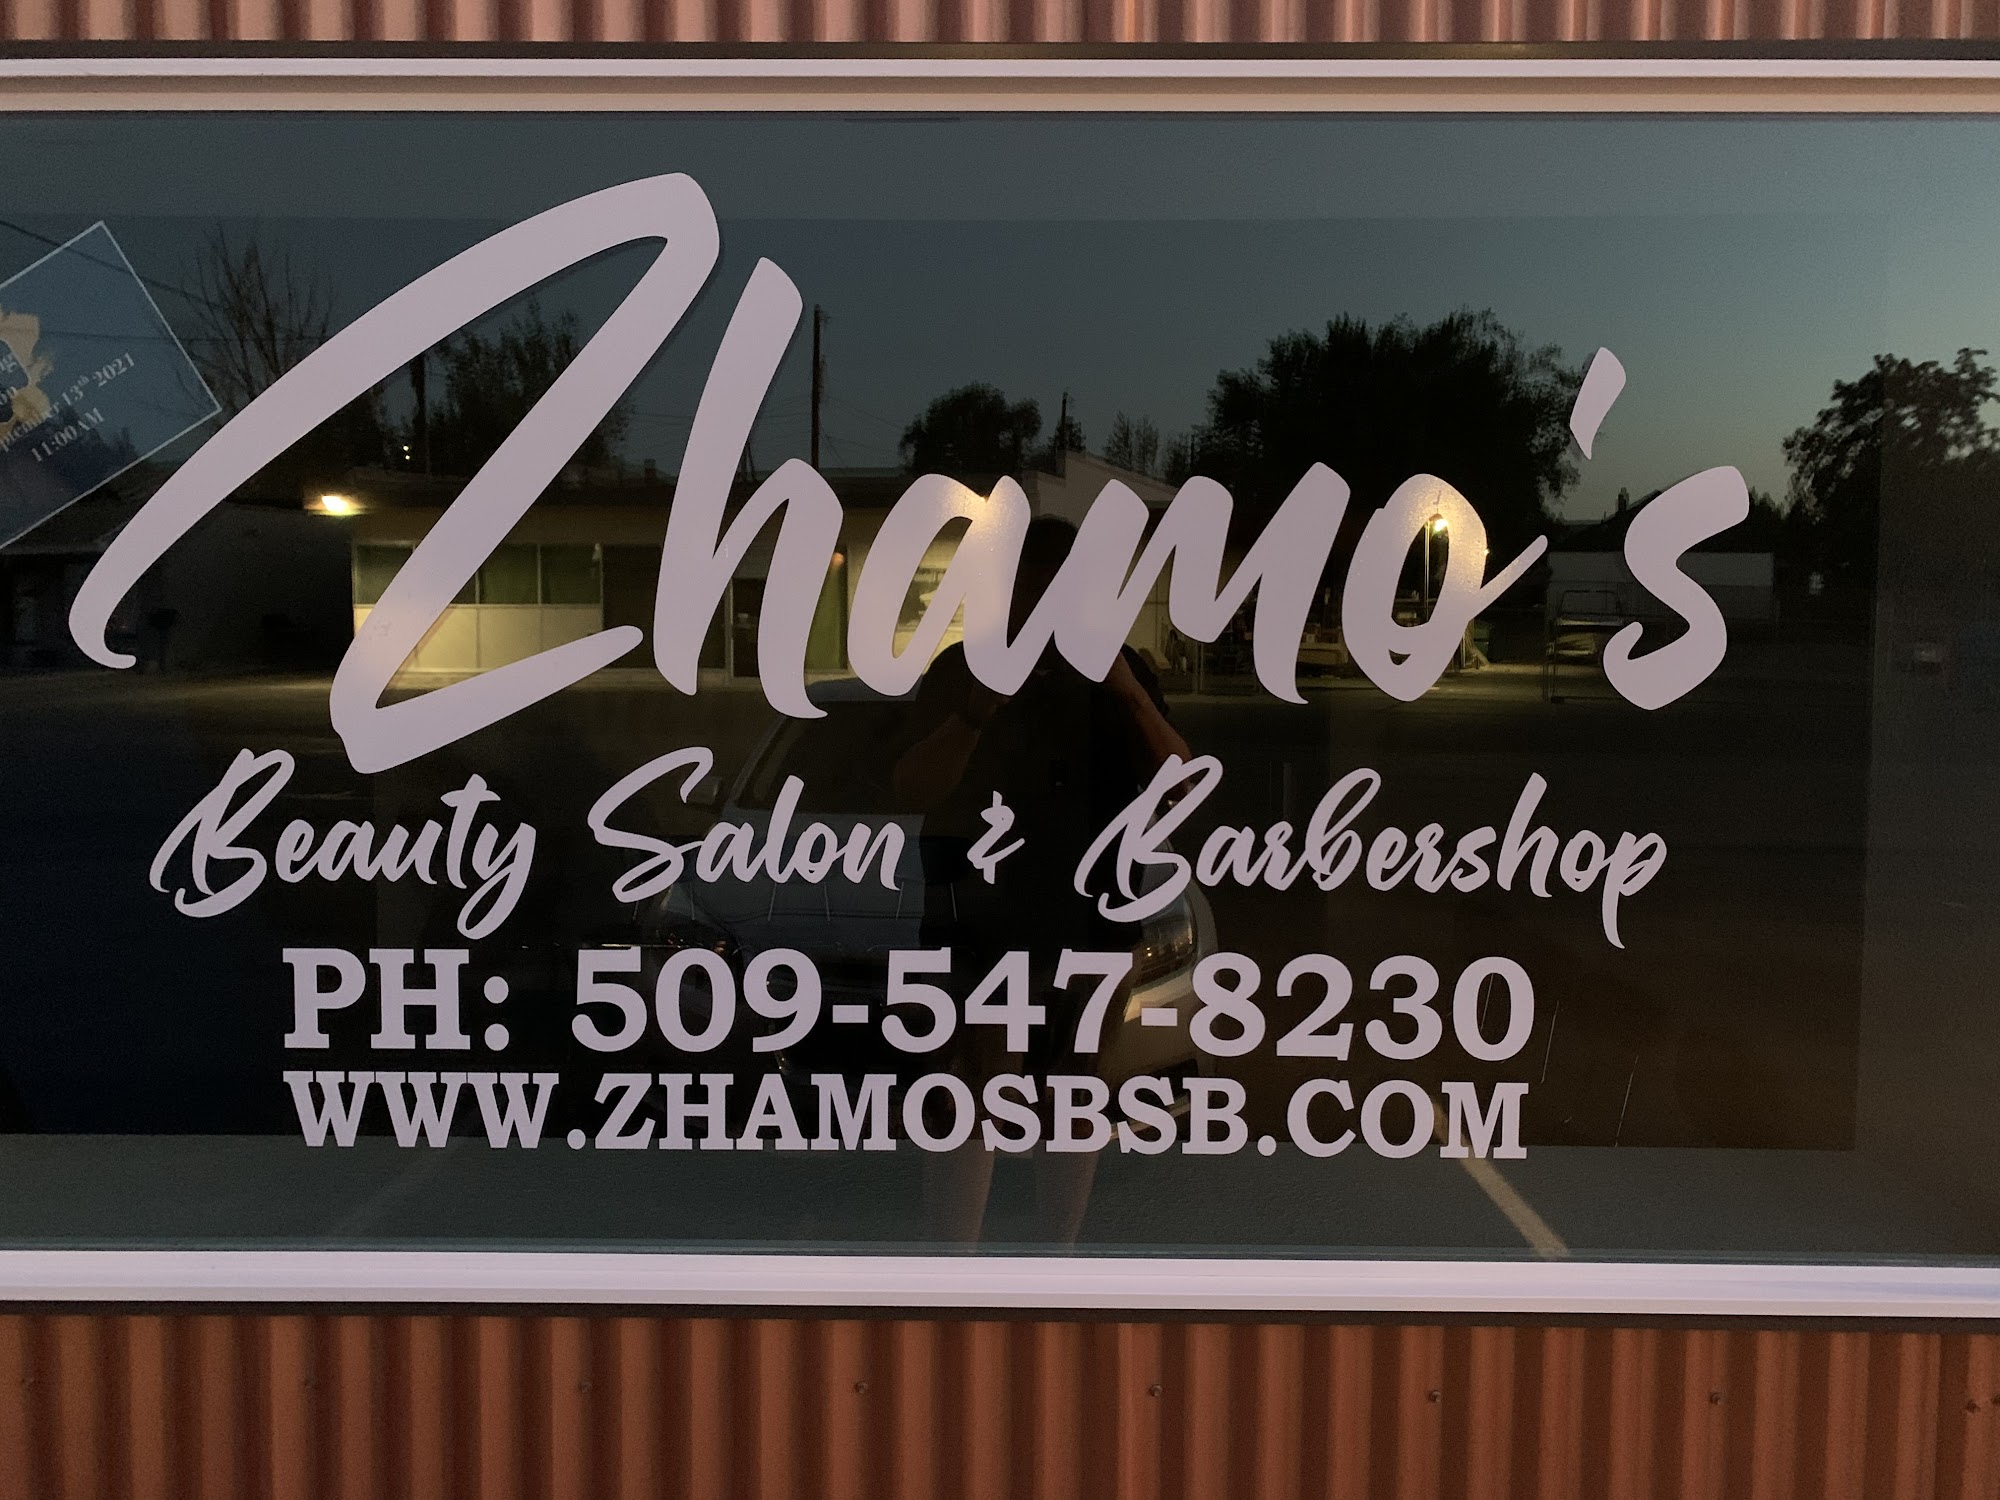 Zhamo's Beauty Salon & Barbershop